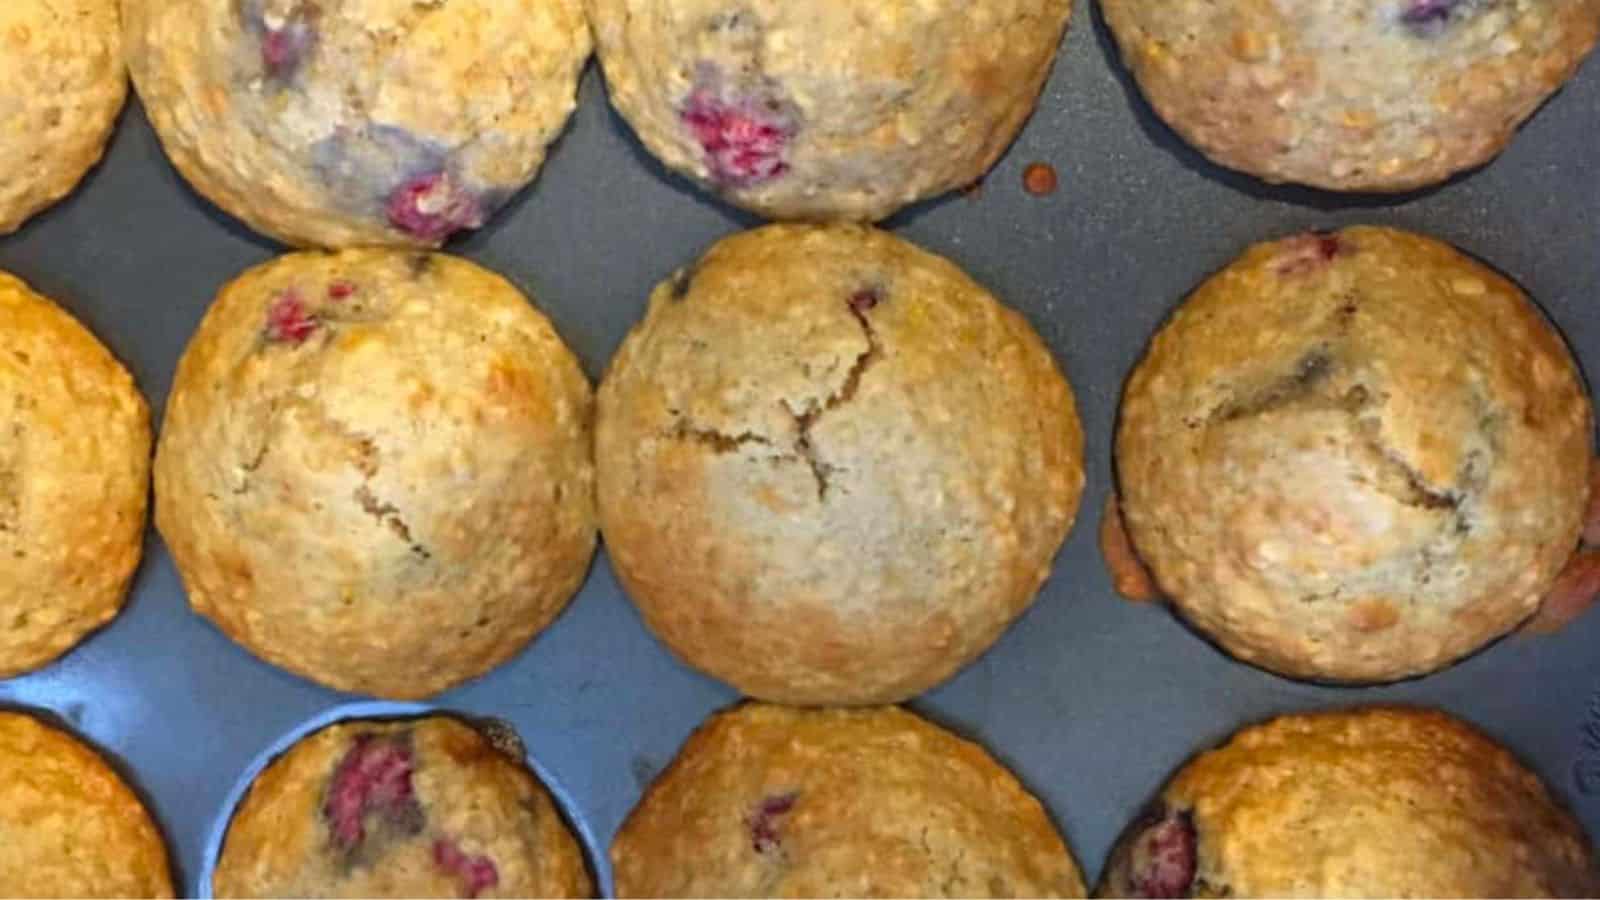 Raspberry lemon almond muffins in a pan.